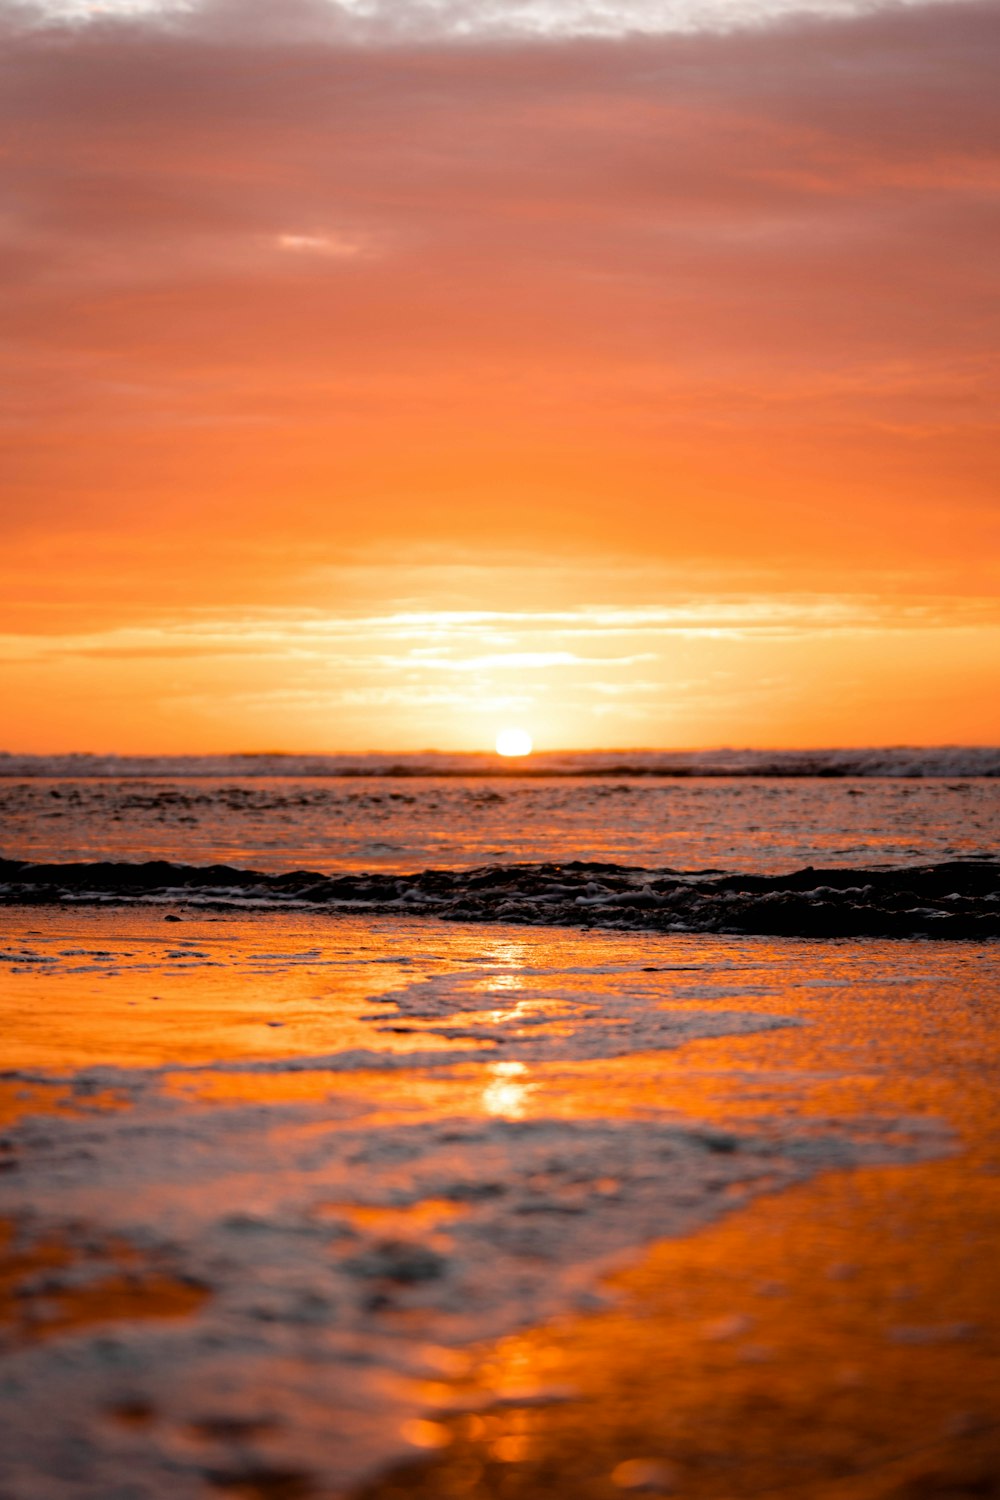 ondas do mar batendo na costa durante o pôr do sol